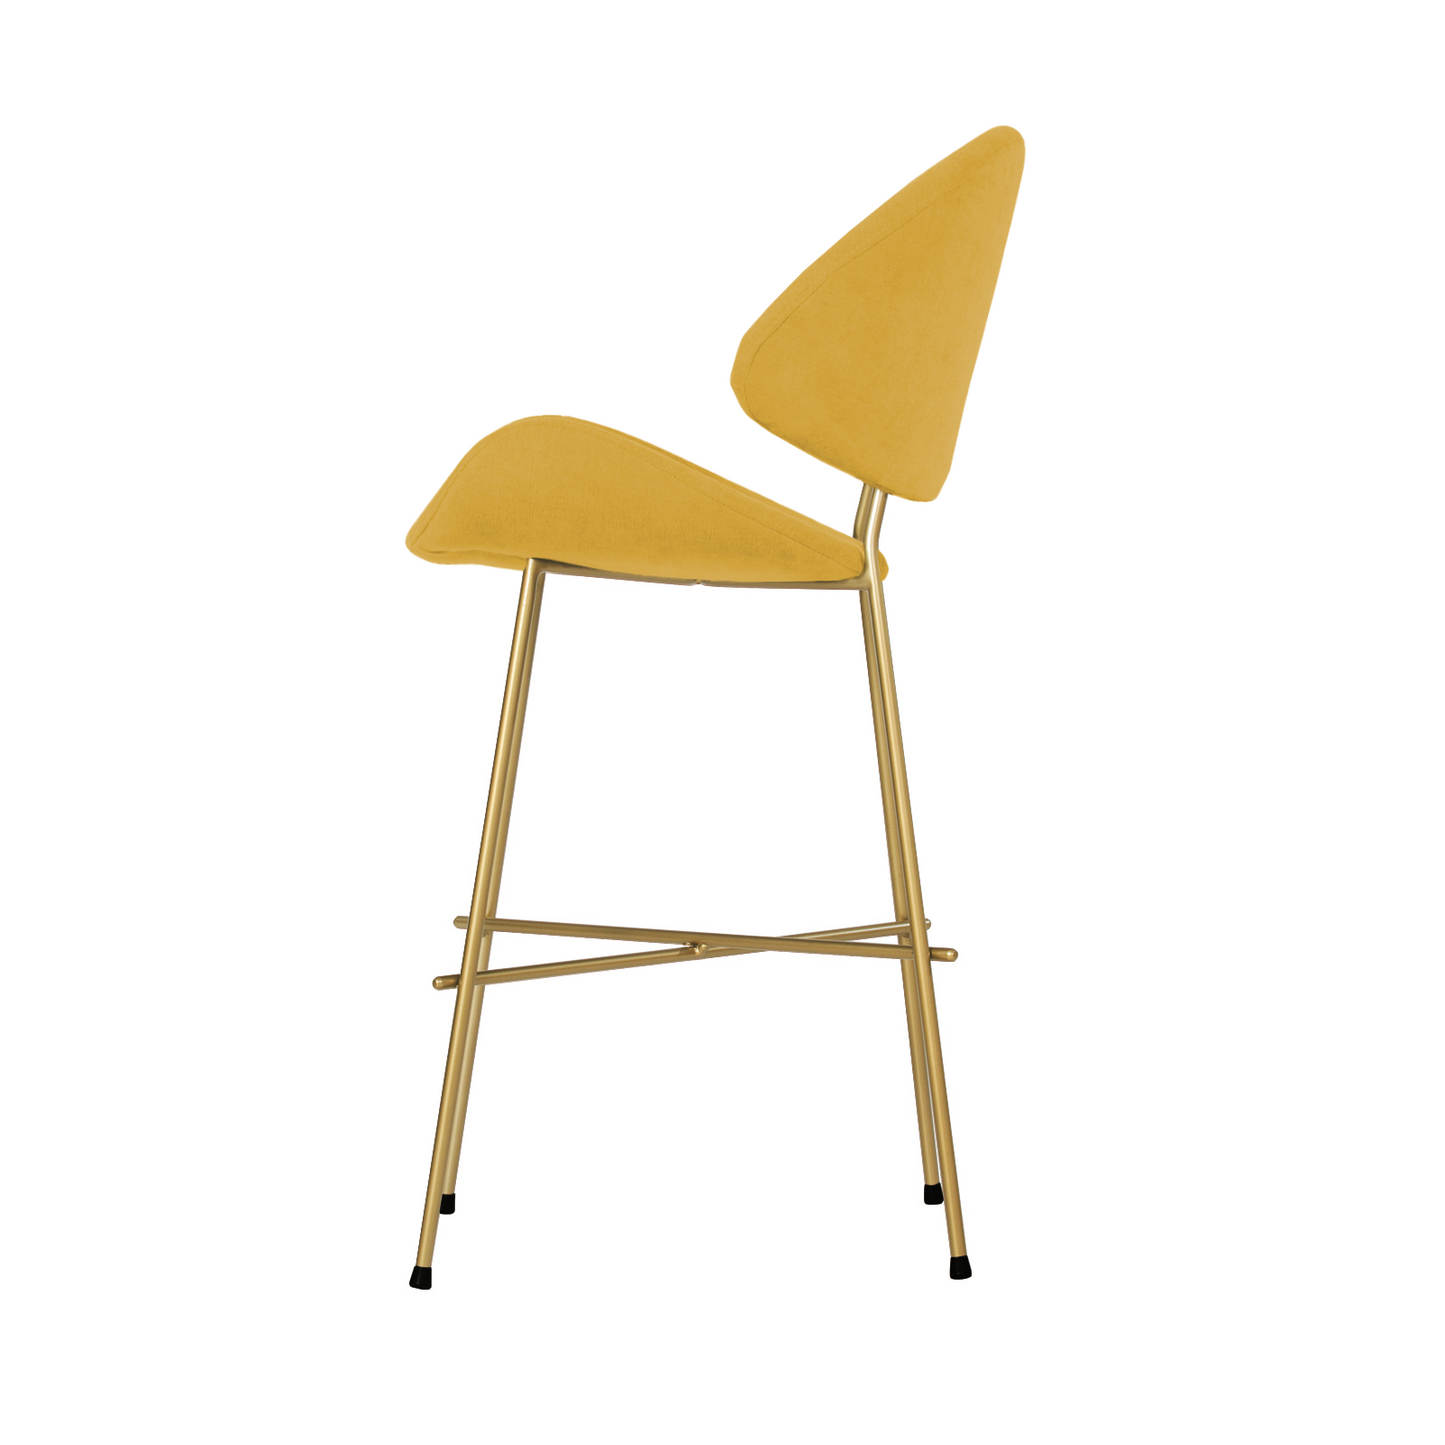 Bar stool Cheri Bar Trend Gold Low - Mustard